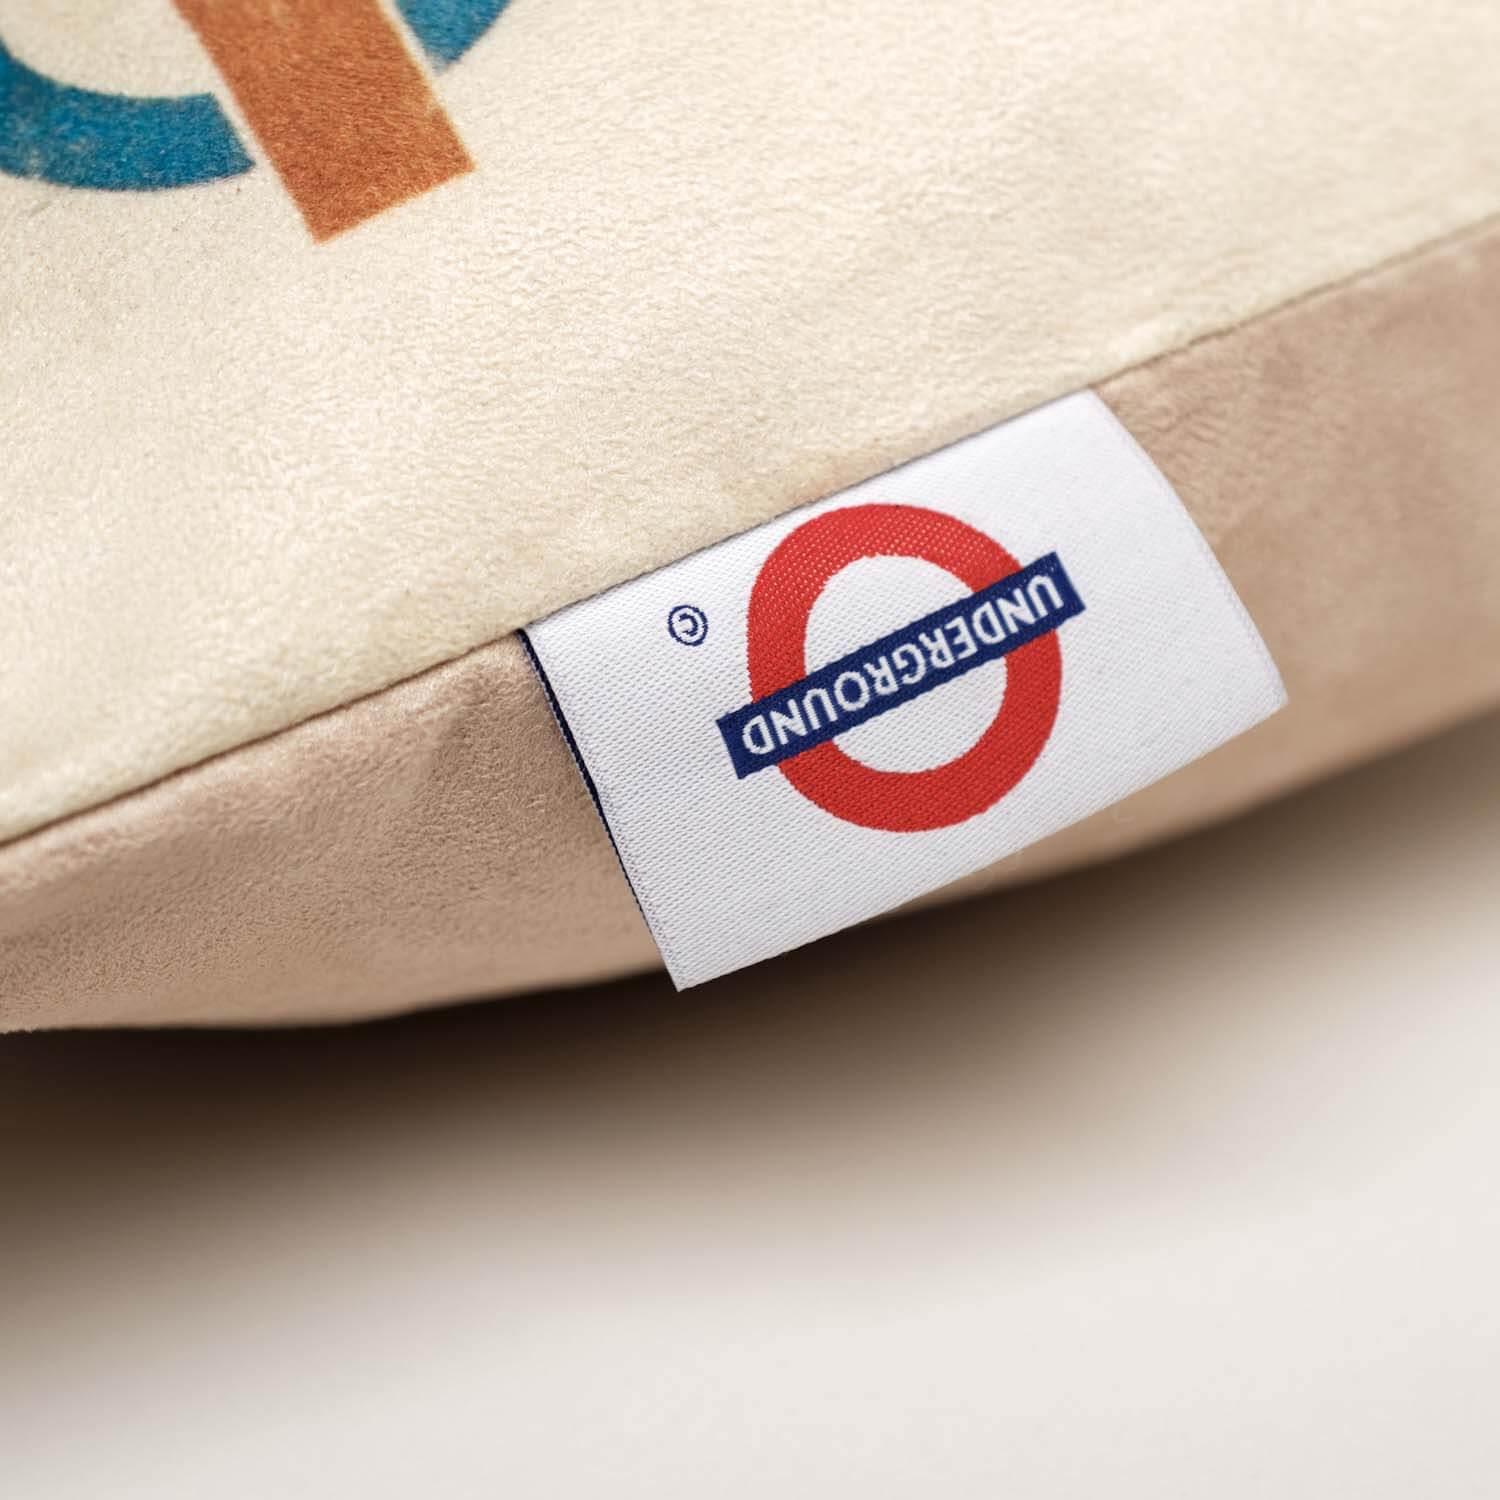 National Gallery By Tube - London Transport Cushion - Handmade Cushions UK - WeLoveCushions